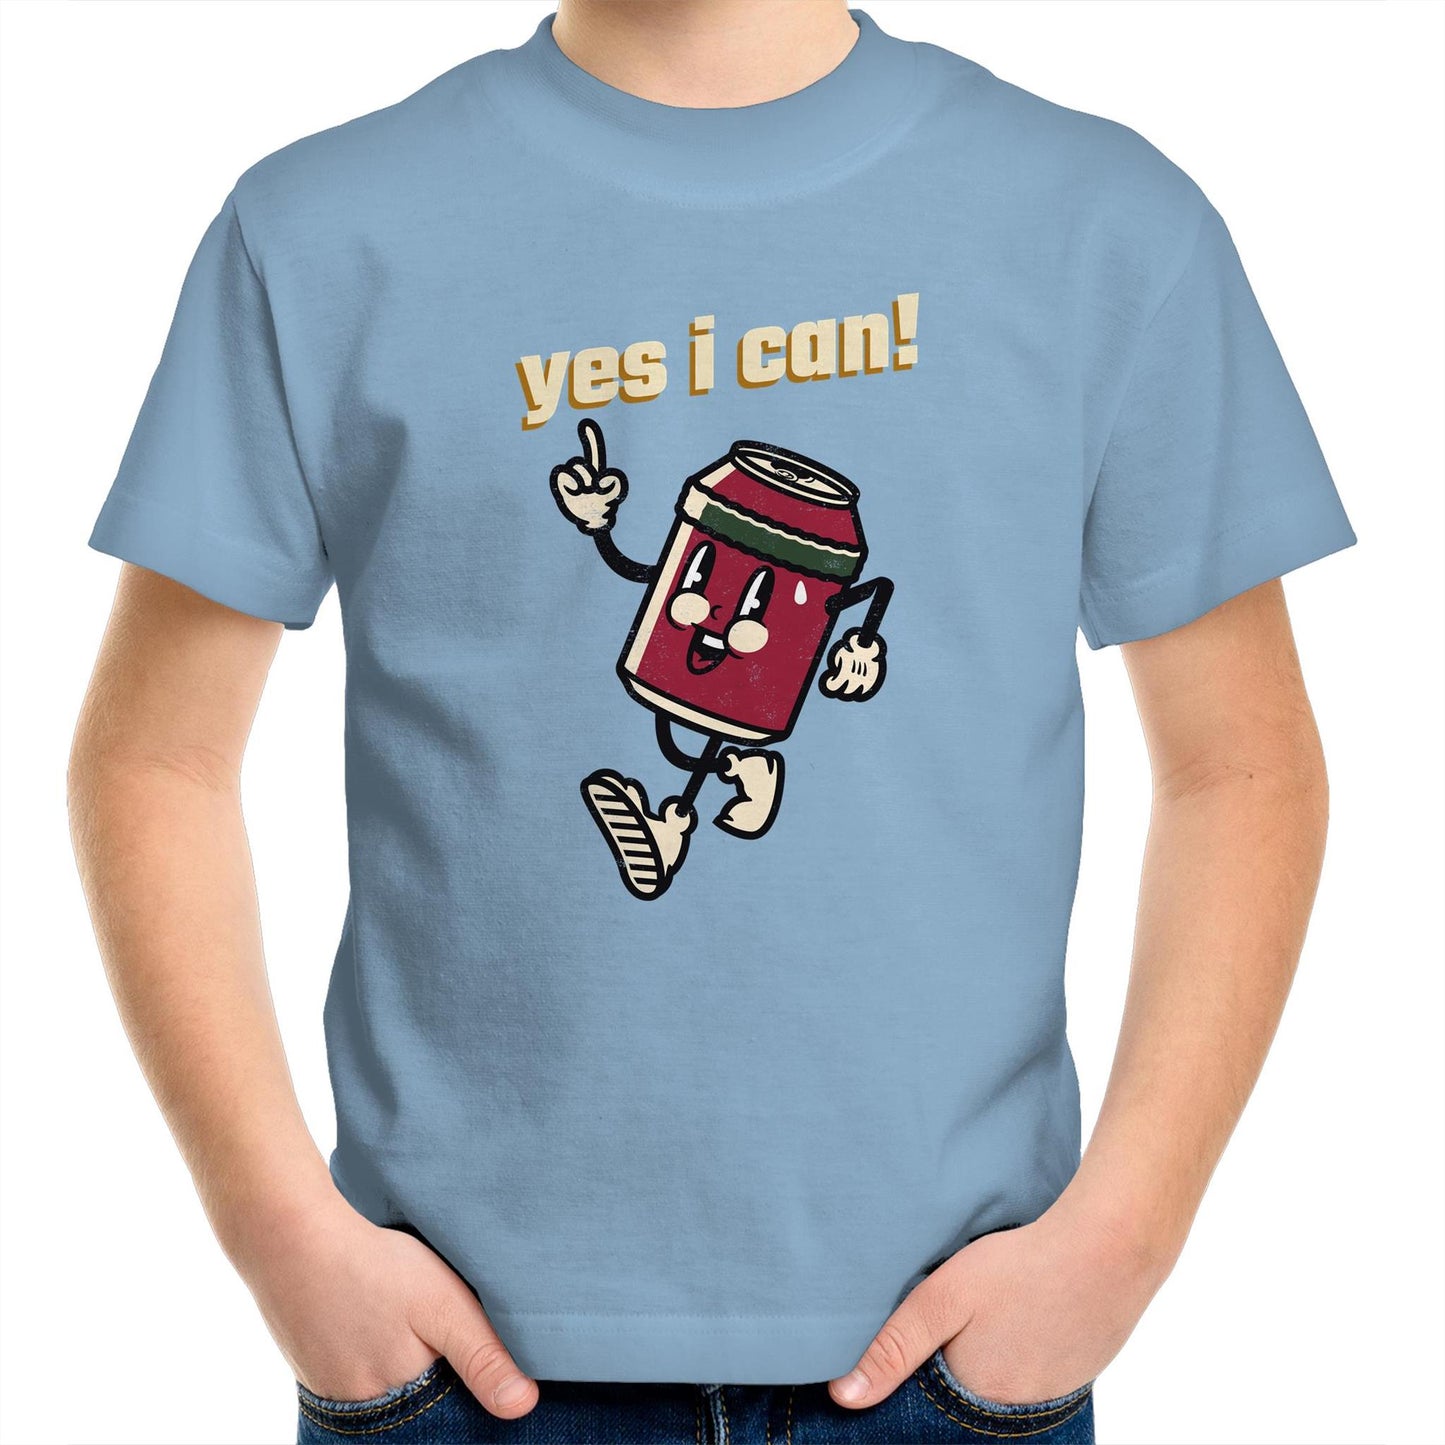 Yes I Can! - Kids Youth Crew T-Shirt Carolina Blue Kids Youth T-shirt Motivation Retro